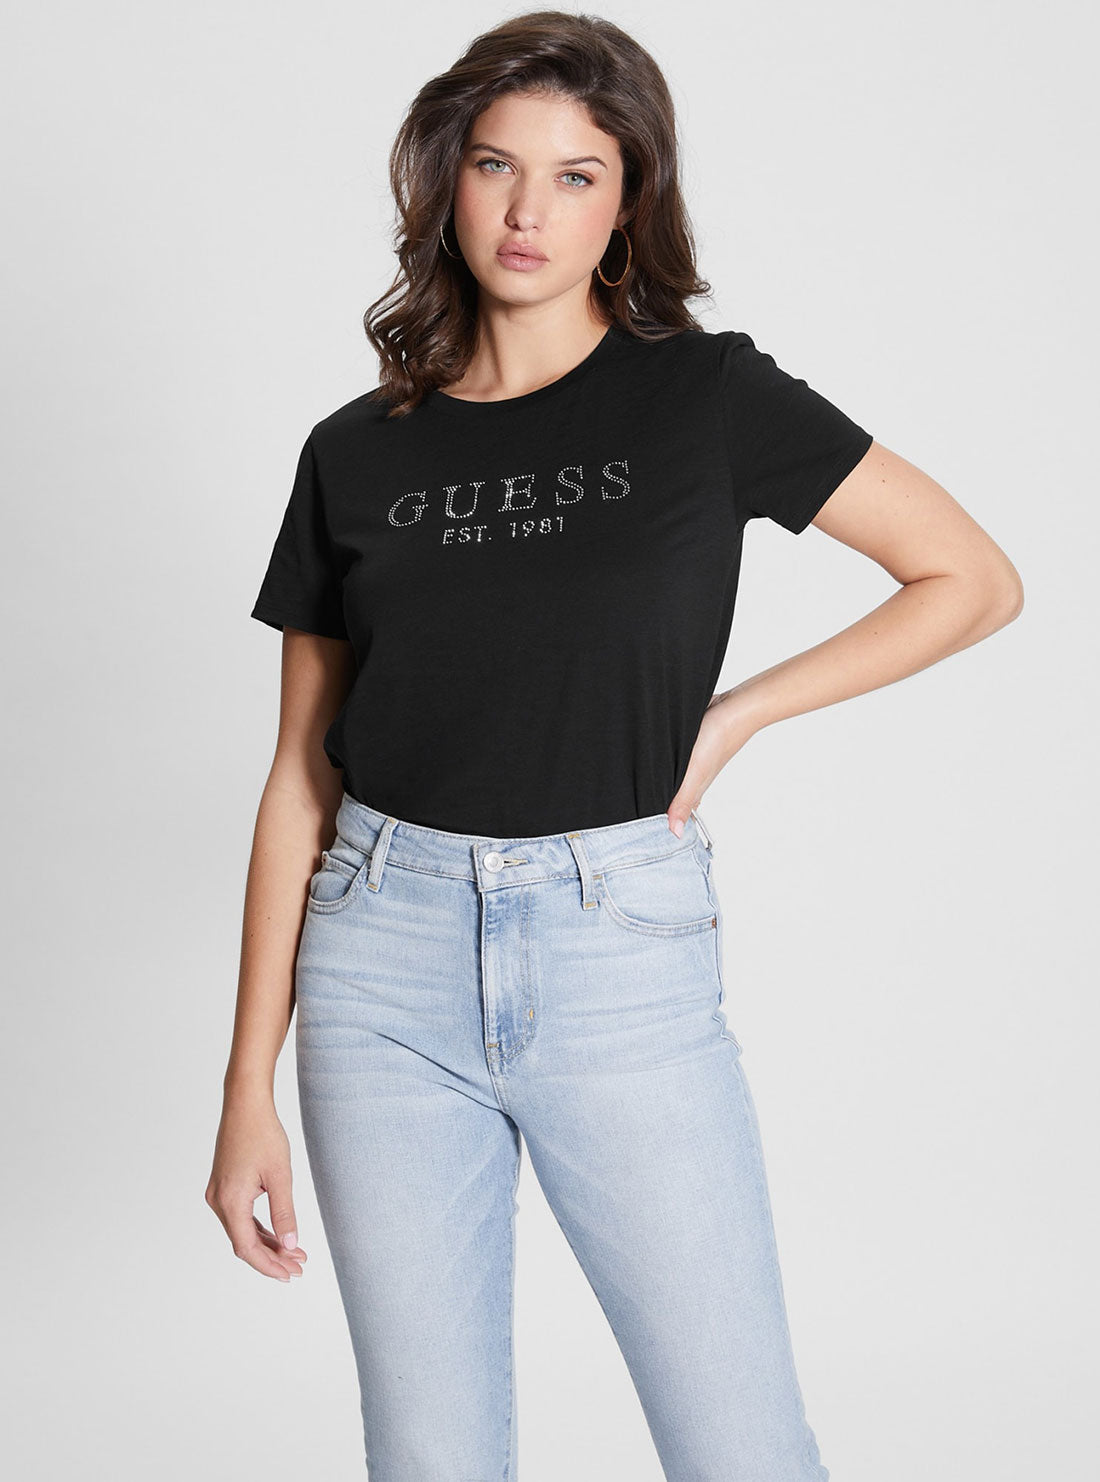 GUESS Women's Eco Black 1981 Crystal Logo T-Shirt W3GI76K8G01 Front View